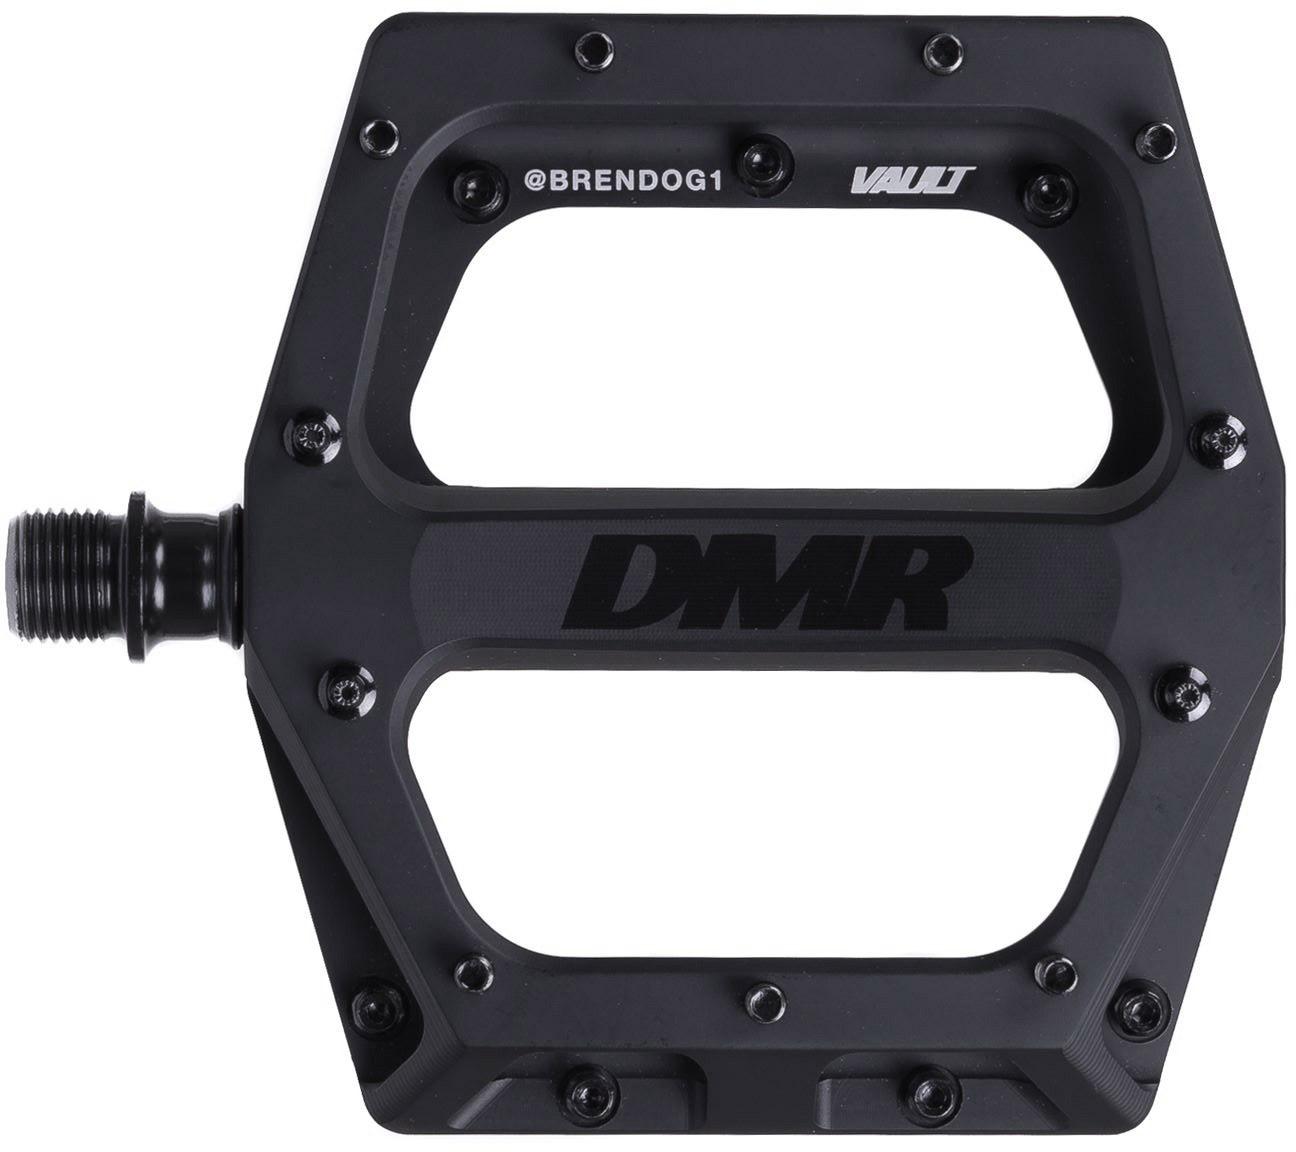 Dmr Vault V2 Brendog Signature Pedals - Black